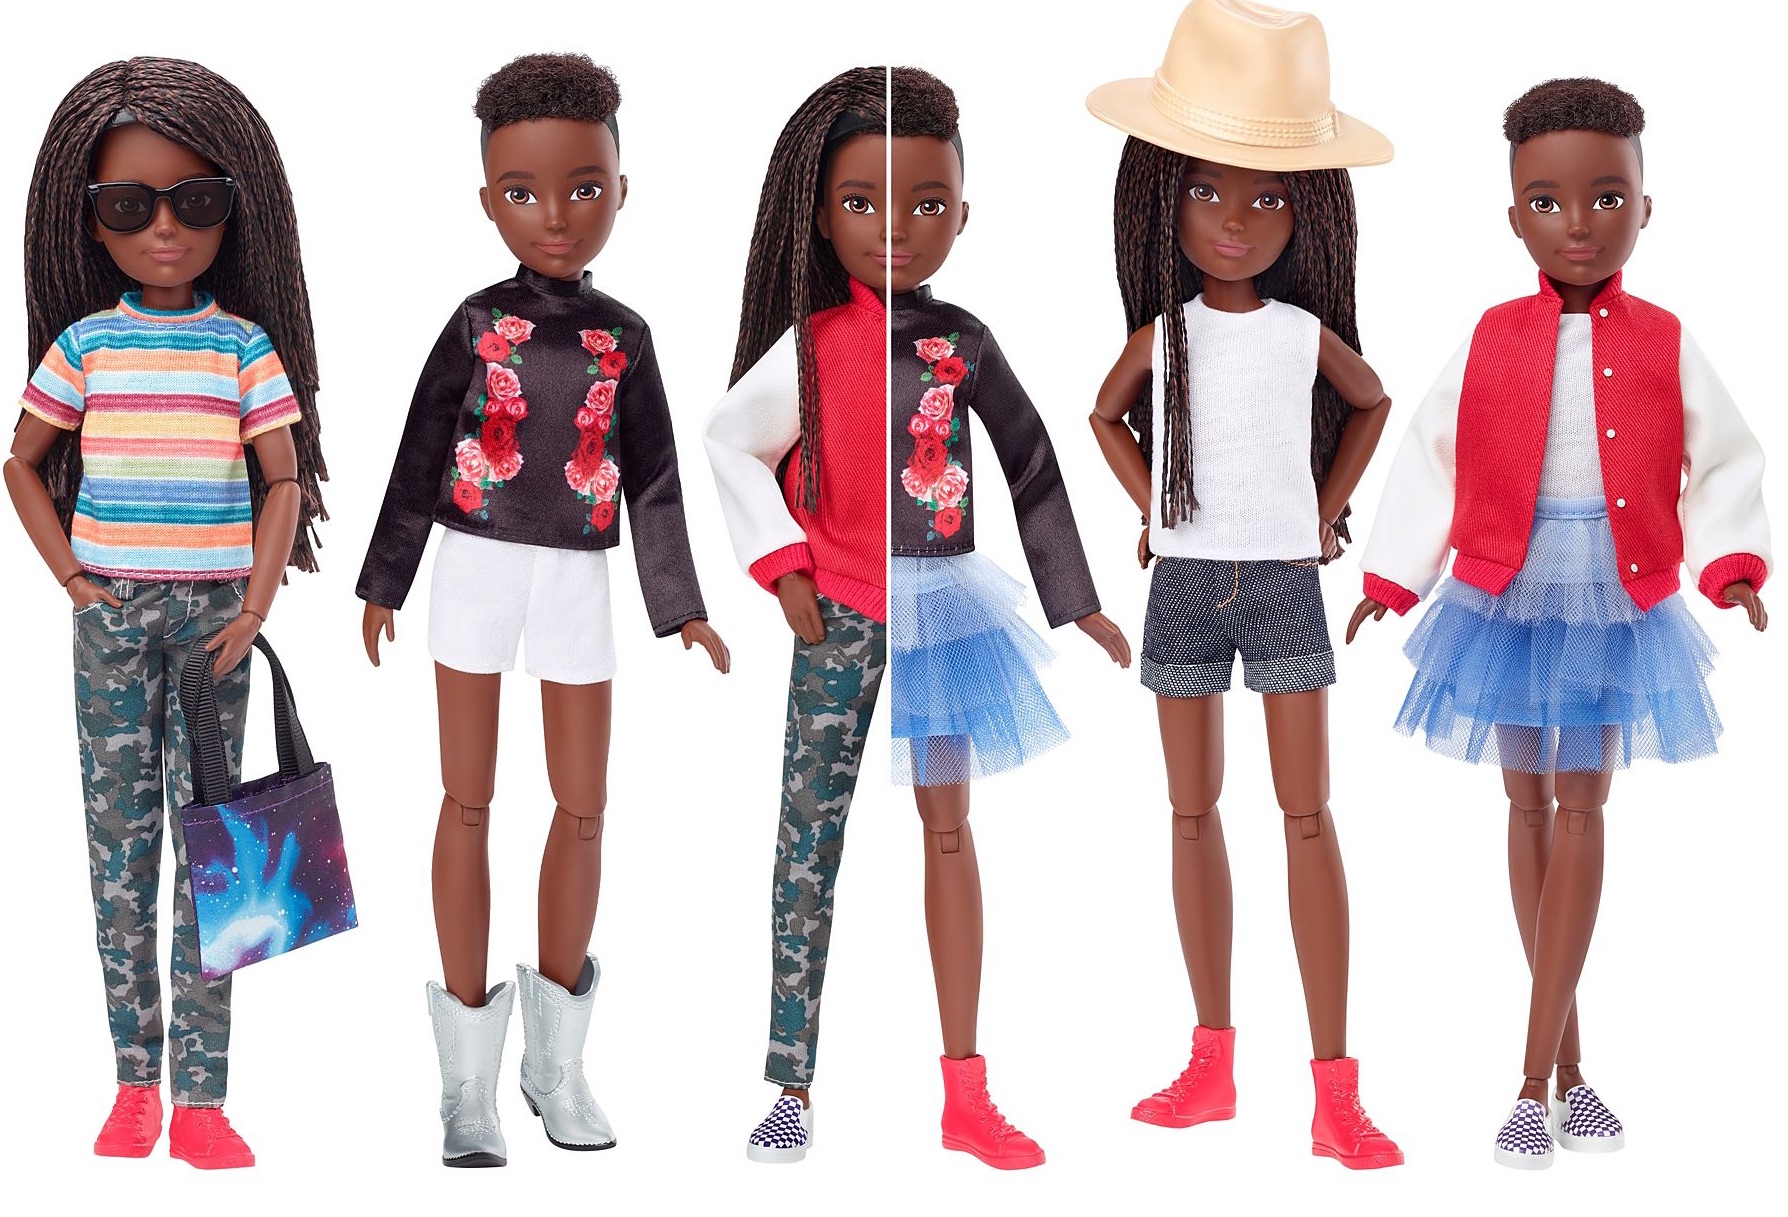 Barbie company Mattel introduces gender-neutral Creatable World doll